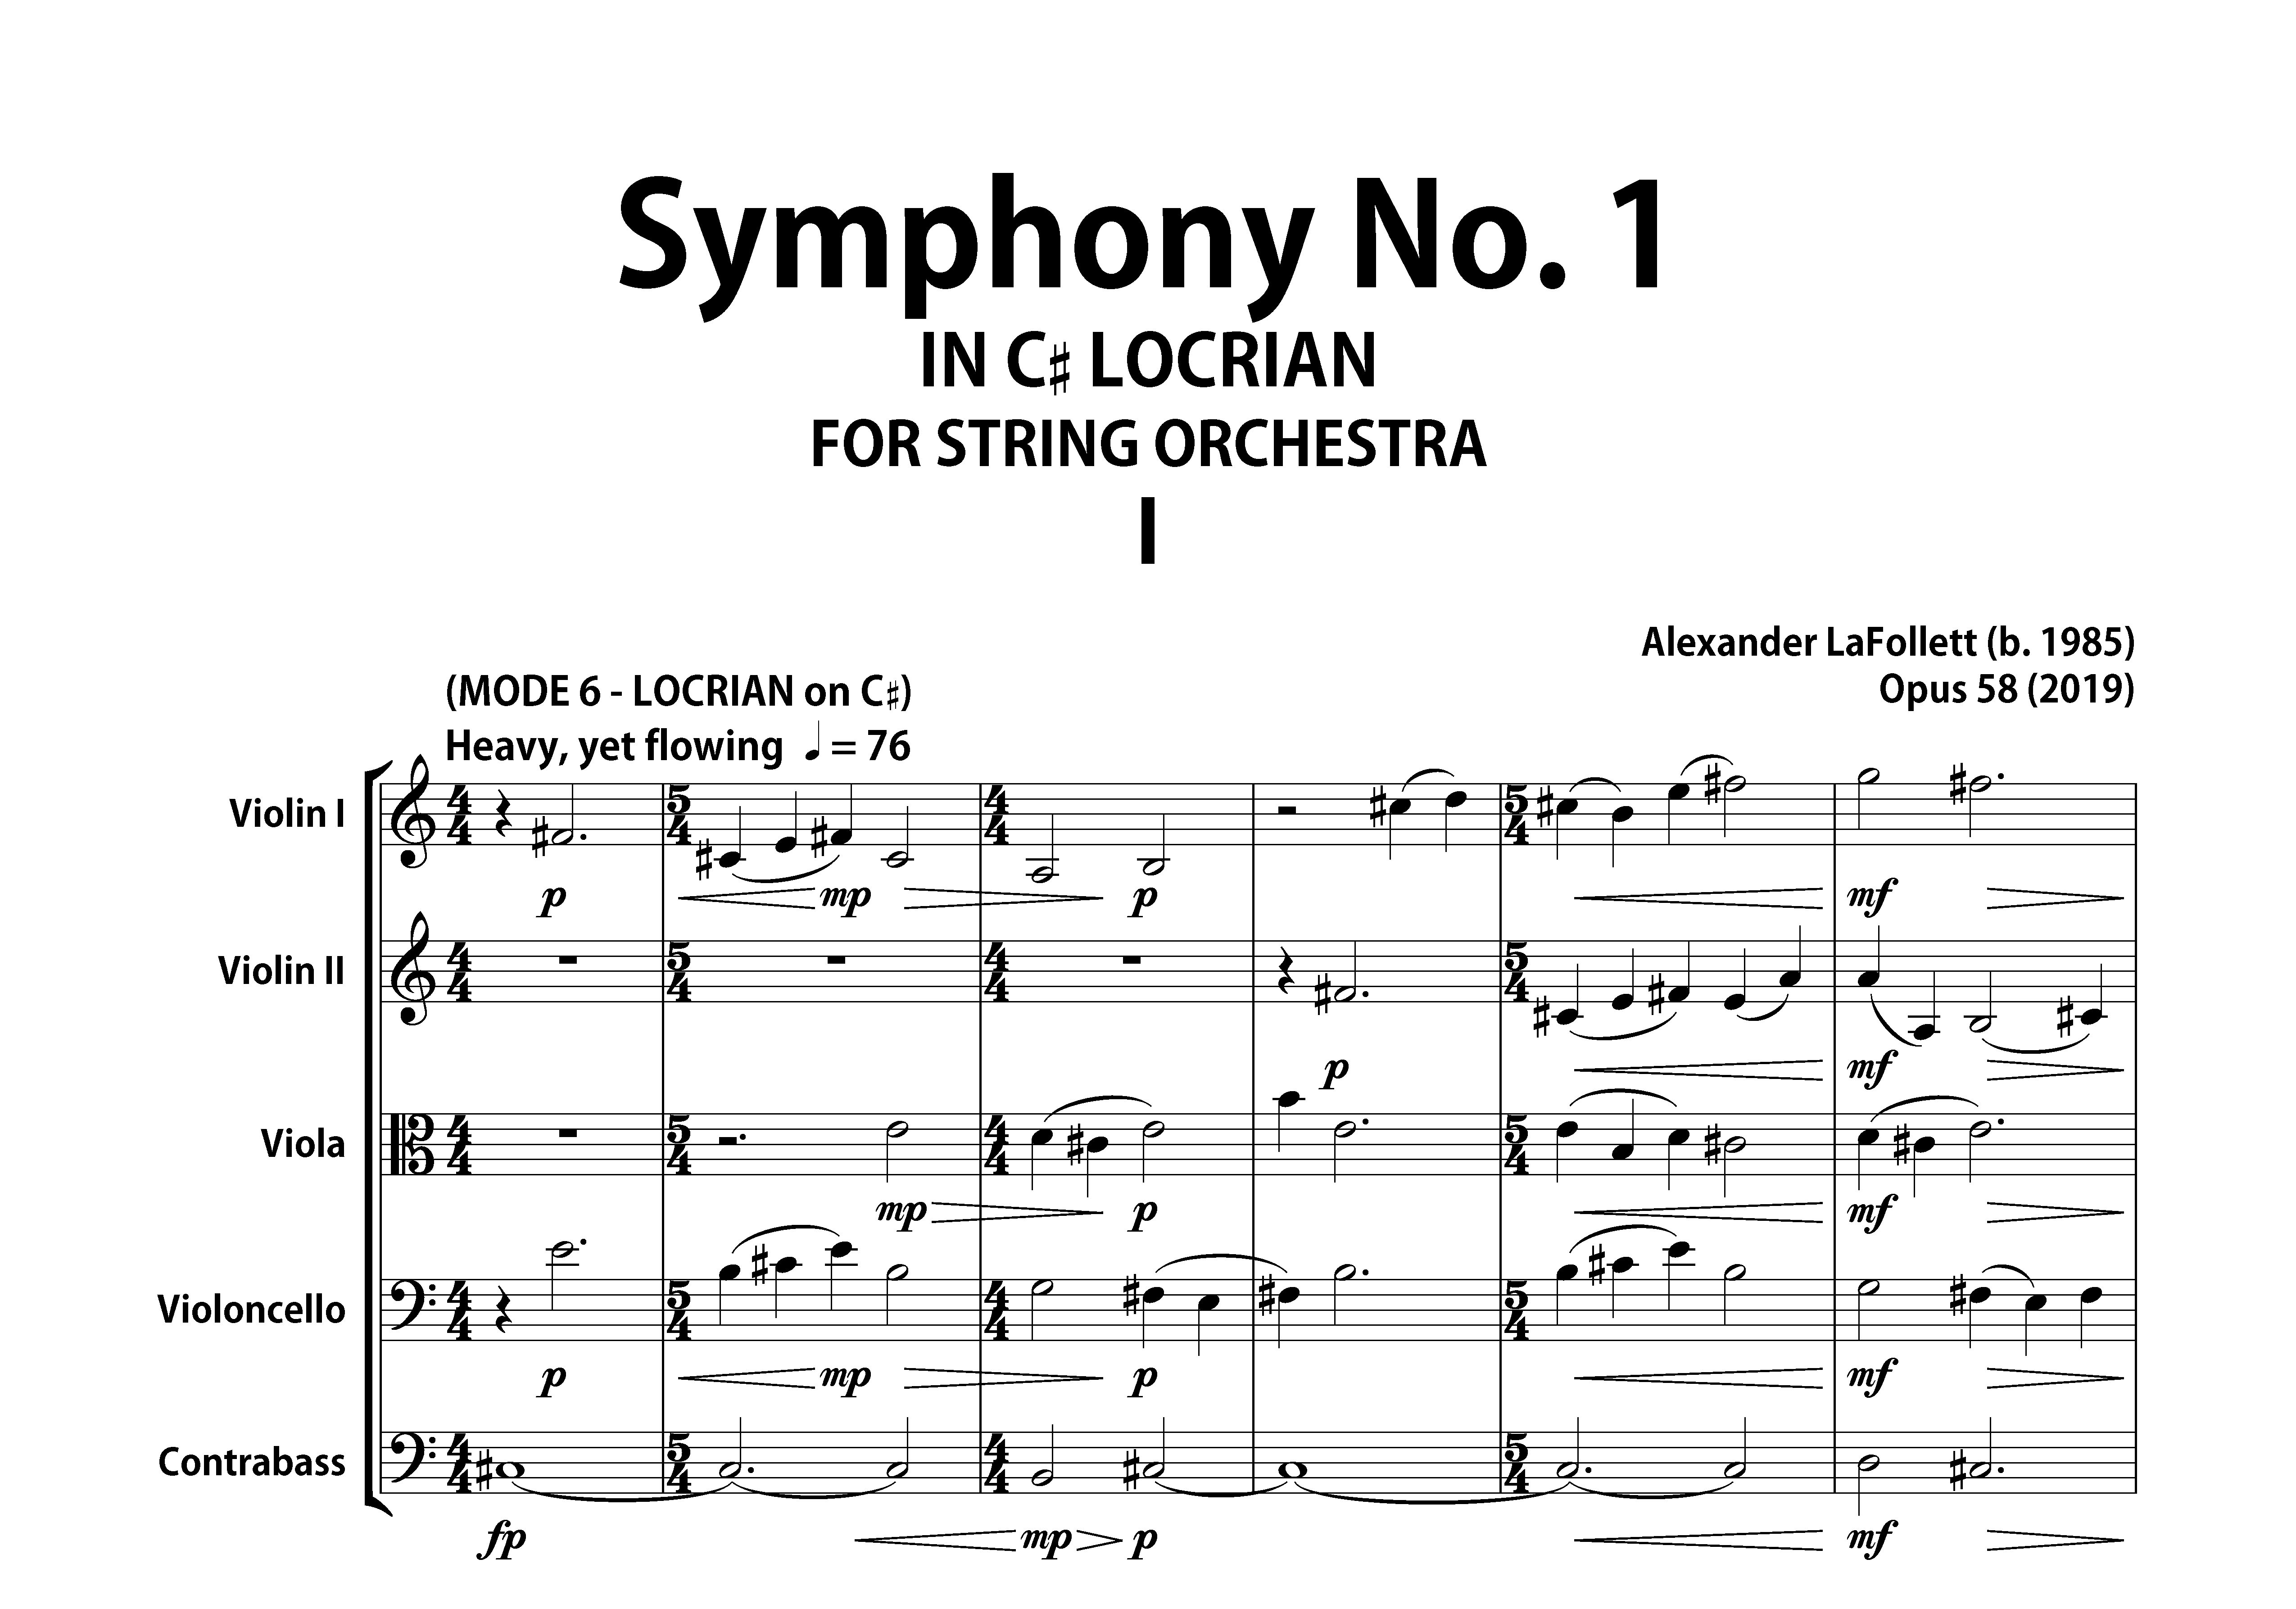 https://alexanderlafollett.com/site/wp-content/uploads/2020/03/Symphony-No.-1-Sys1_0001-Copy.png